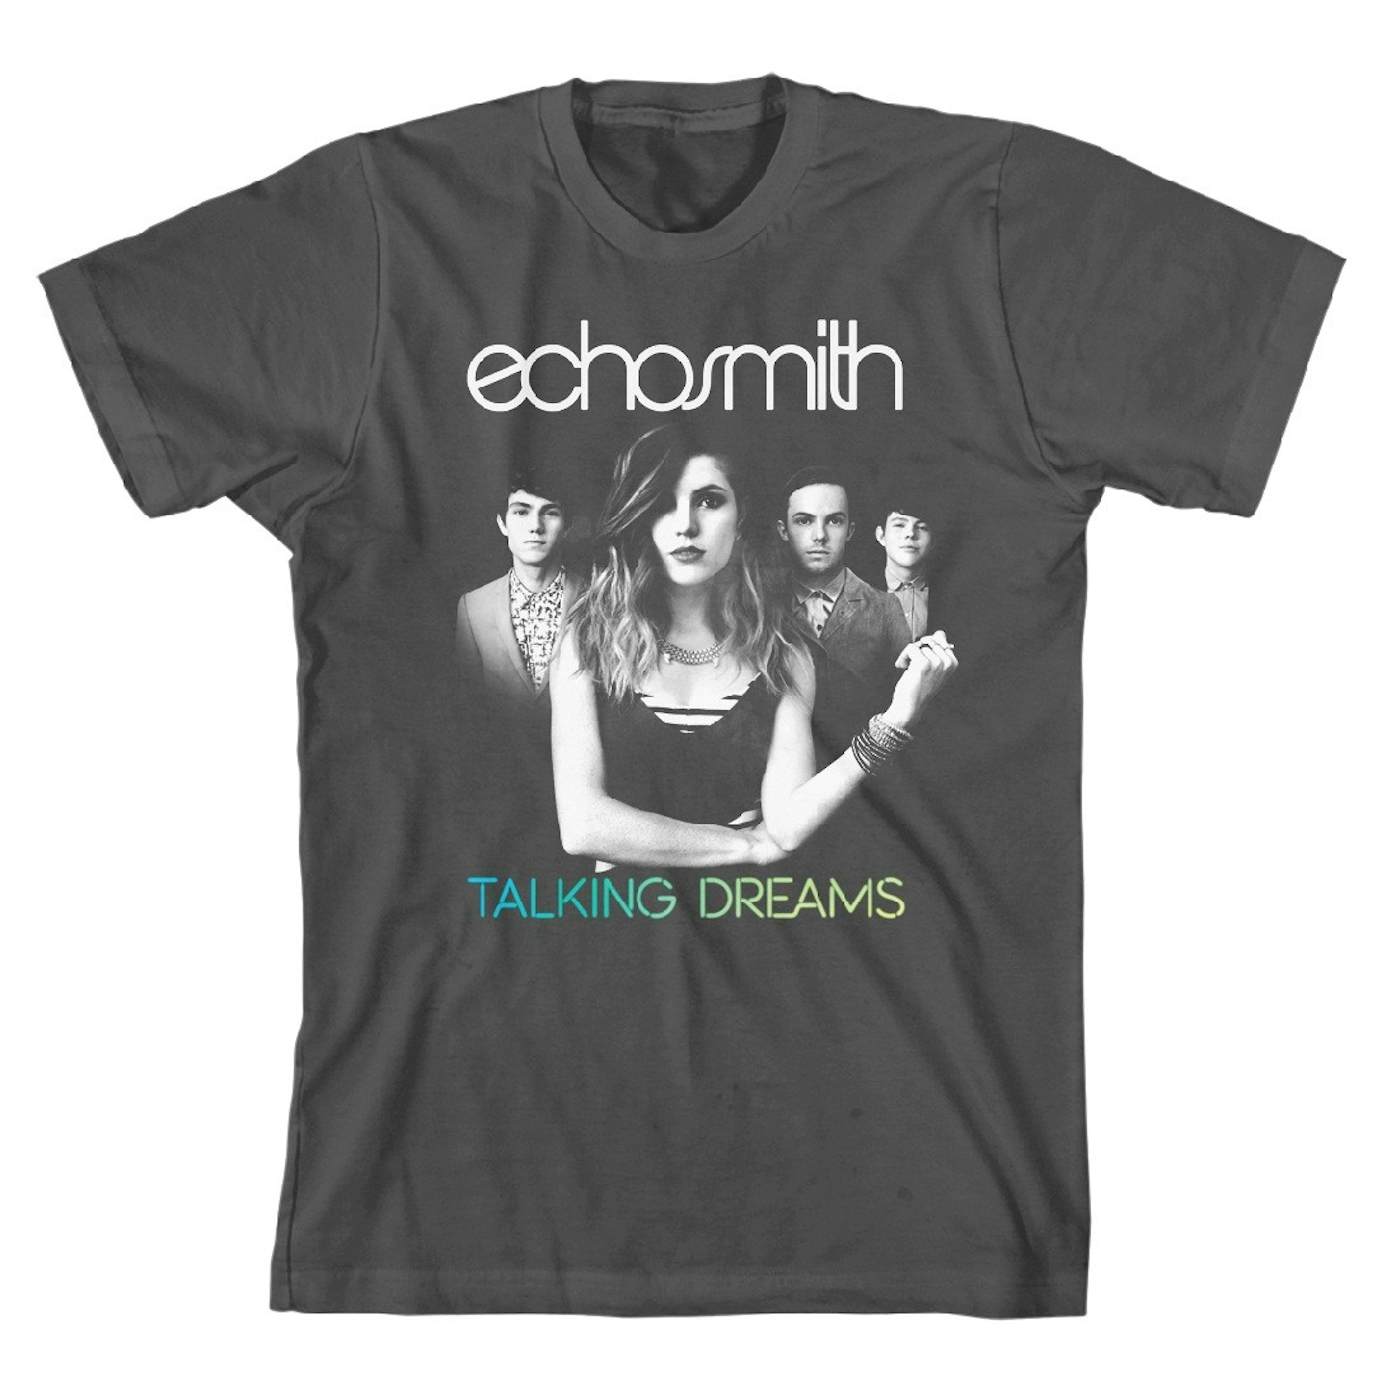 Echosmith Talking Dreams Photo Tee